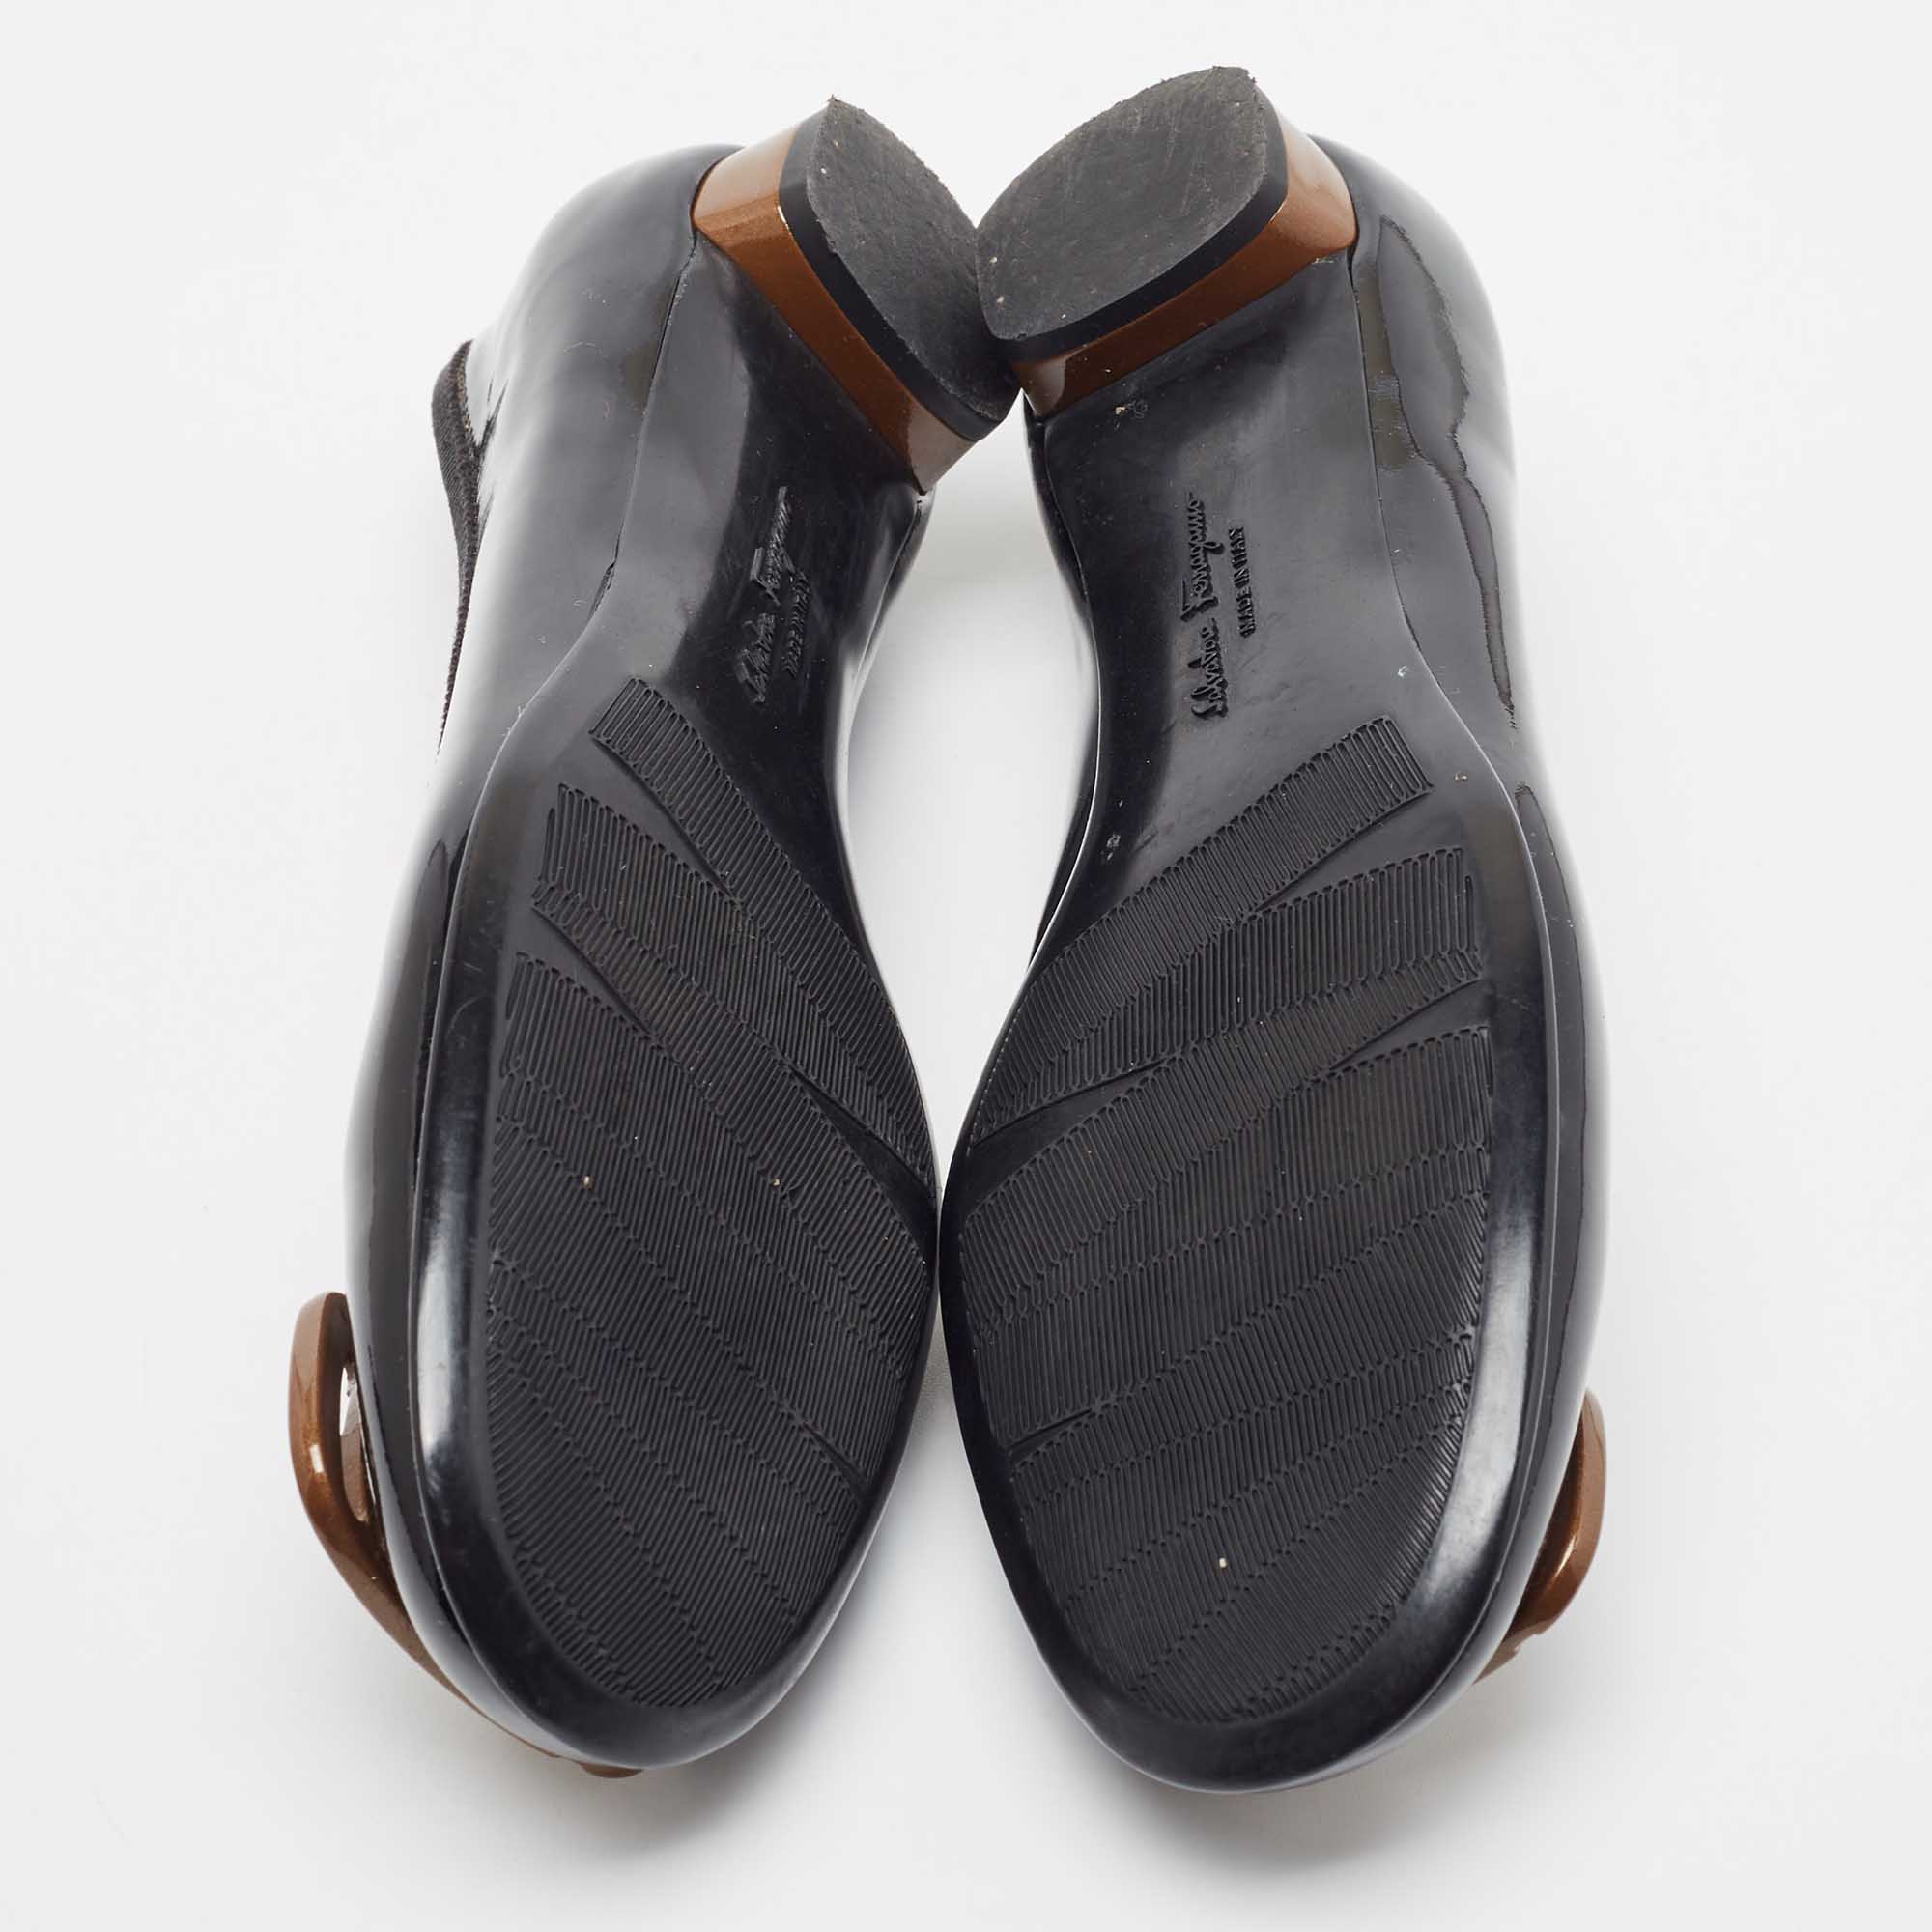 Salvatore Ferragamo Black Patent Leather  Buckle Ballet Flats Size 35.5